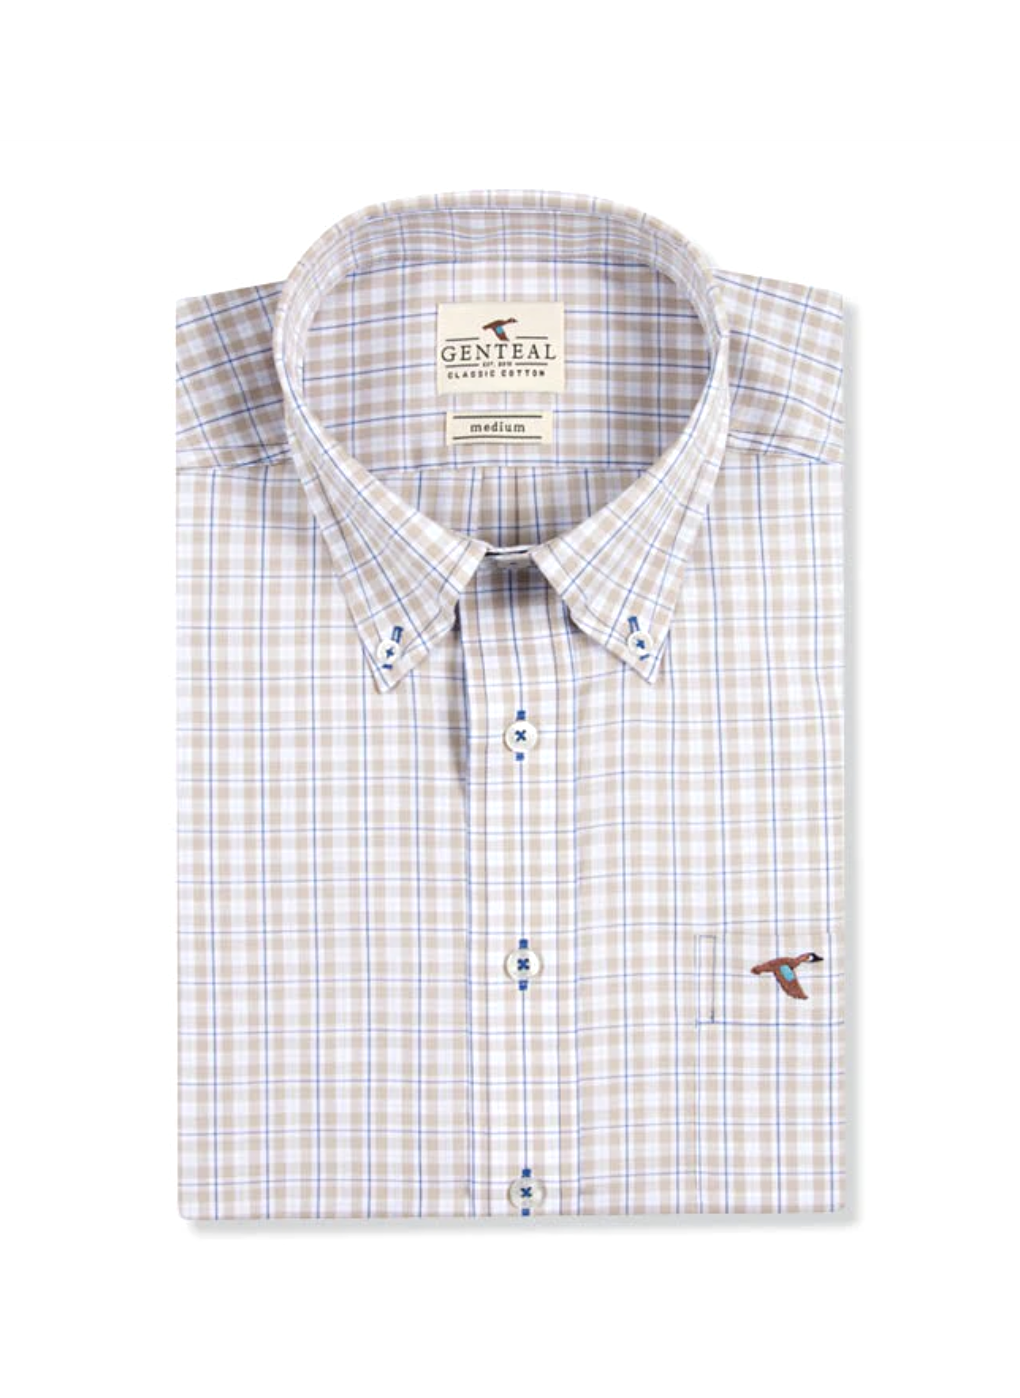 Durango Plaid Cotton Shirt